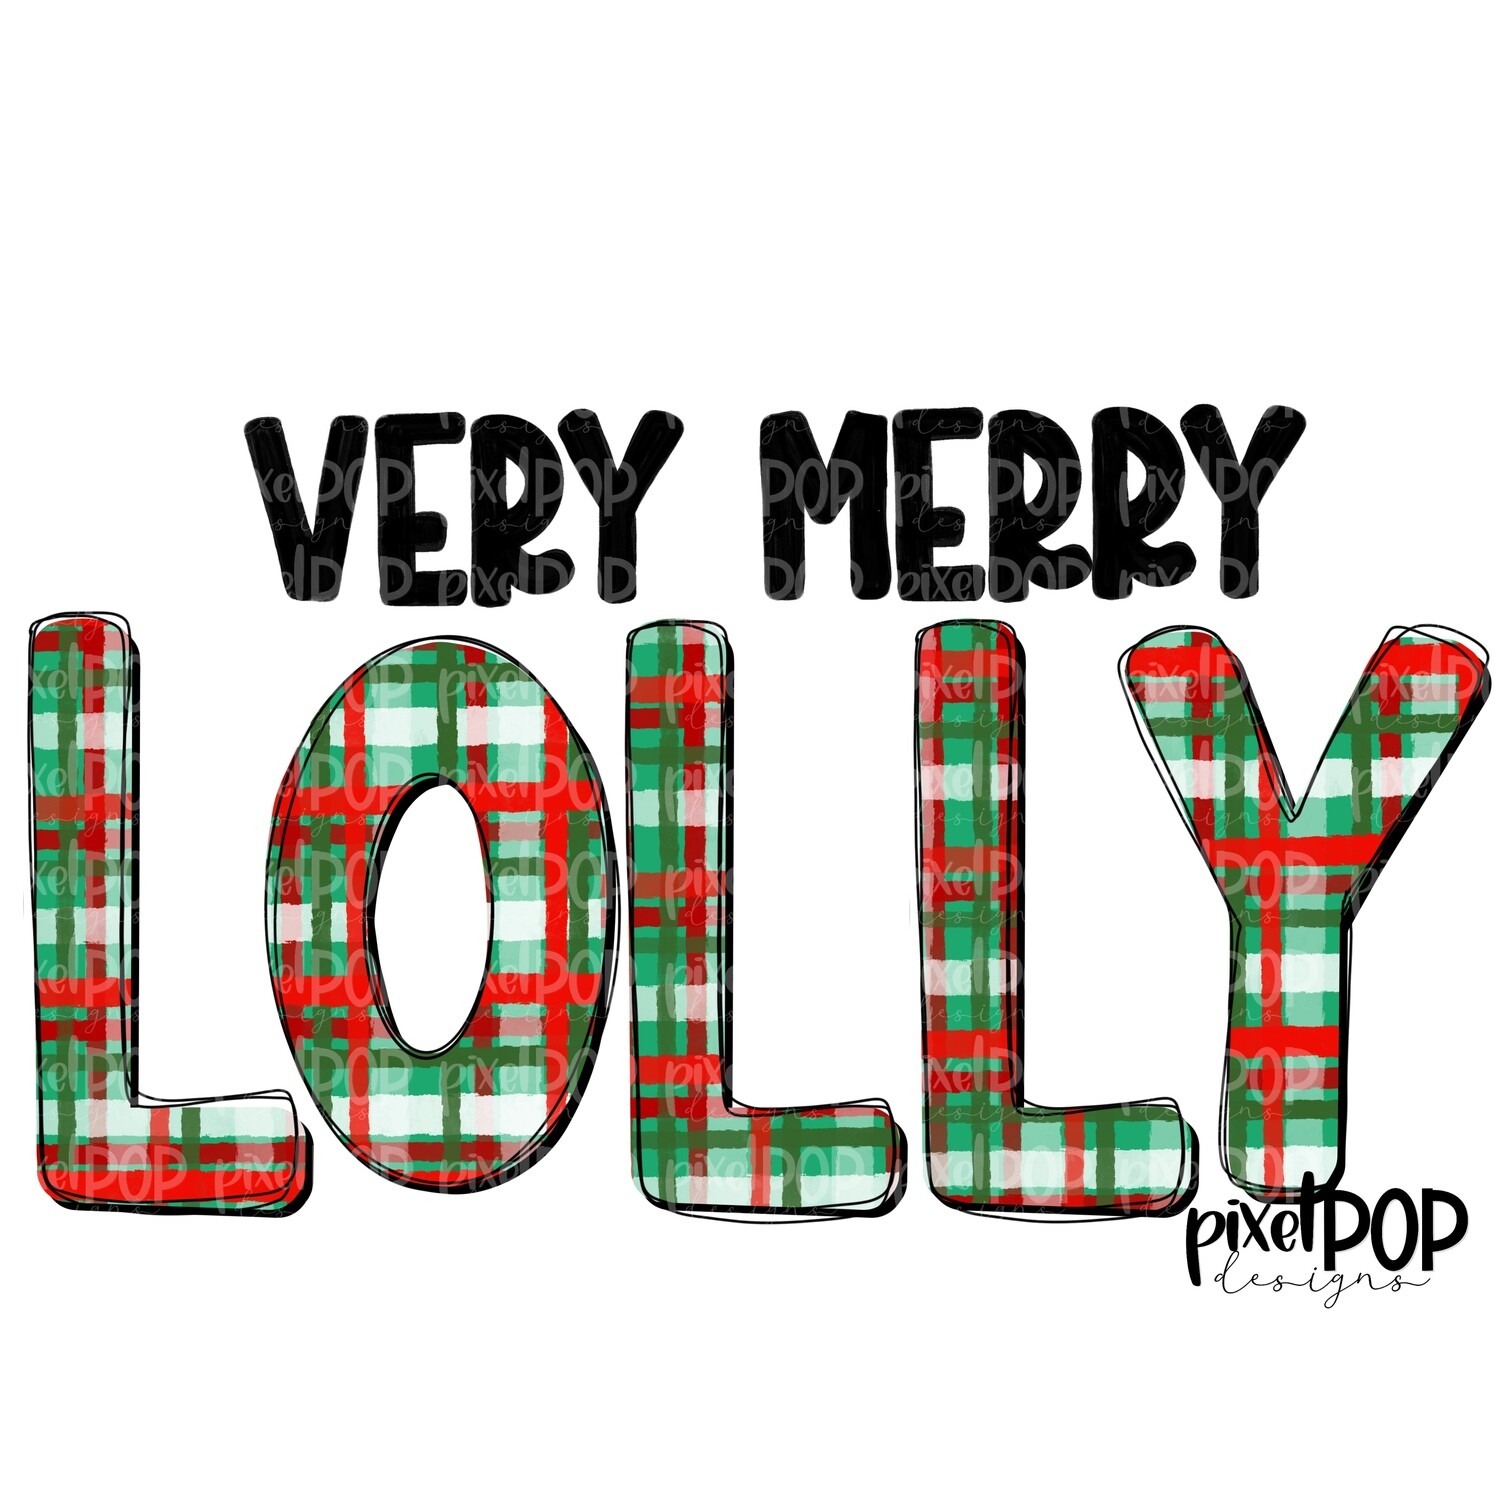 Very Merry Lolly Christmas PLAID PNG | Christmas Design | Sublimation Art | Digital Download | Printable Artwork | Art